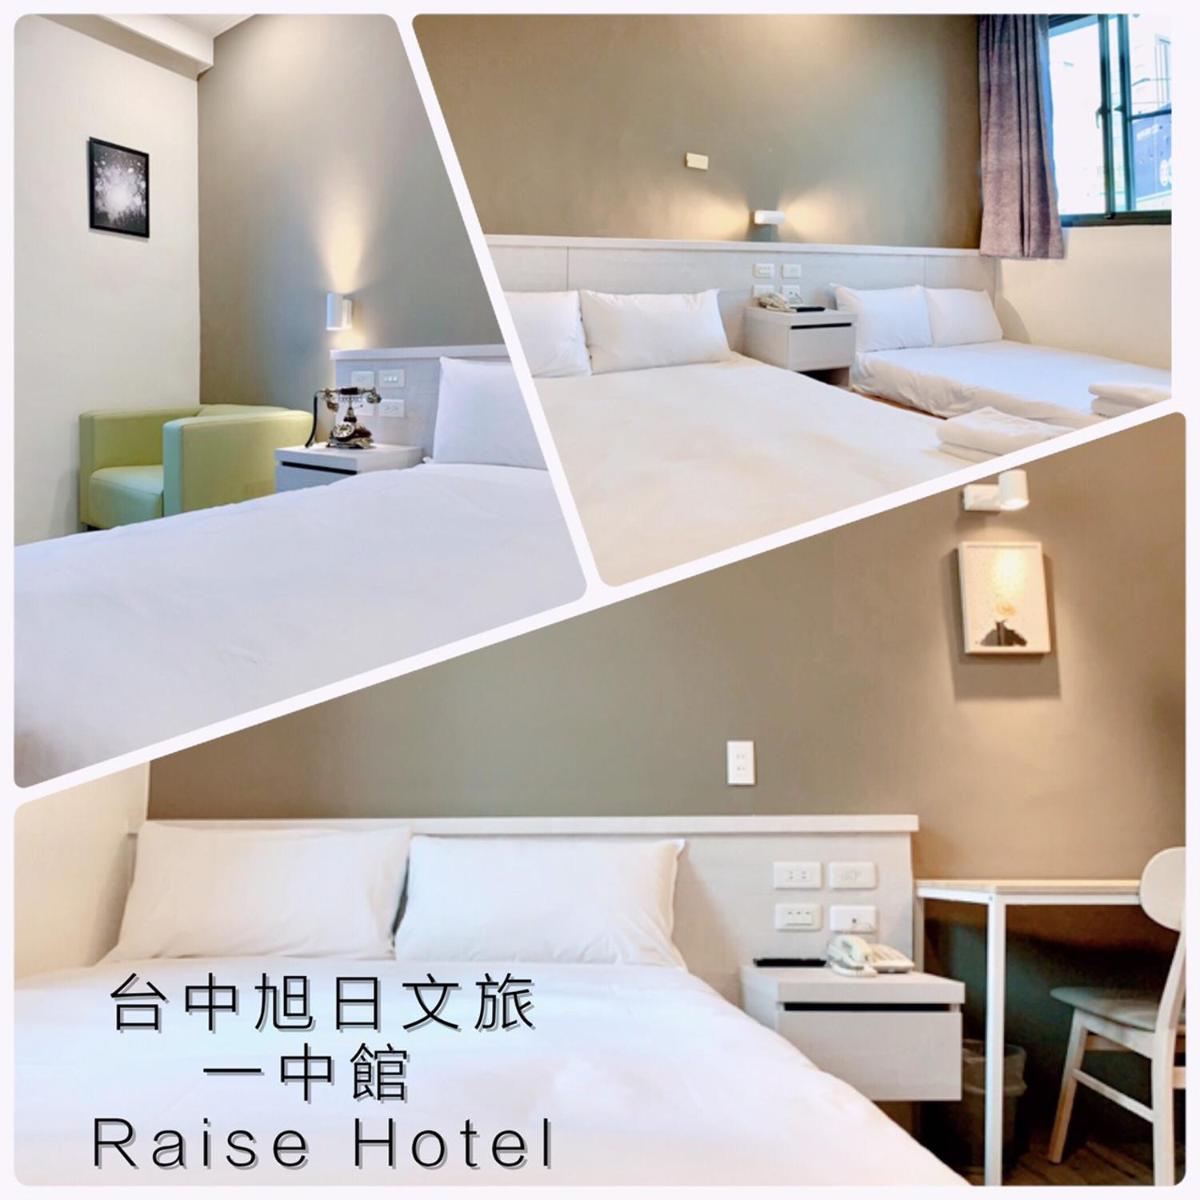 Raise Hotel Taichung - Housity